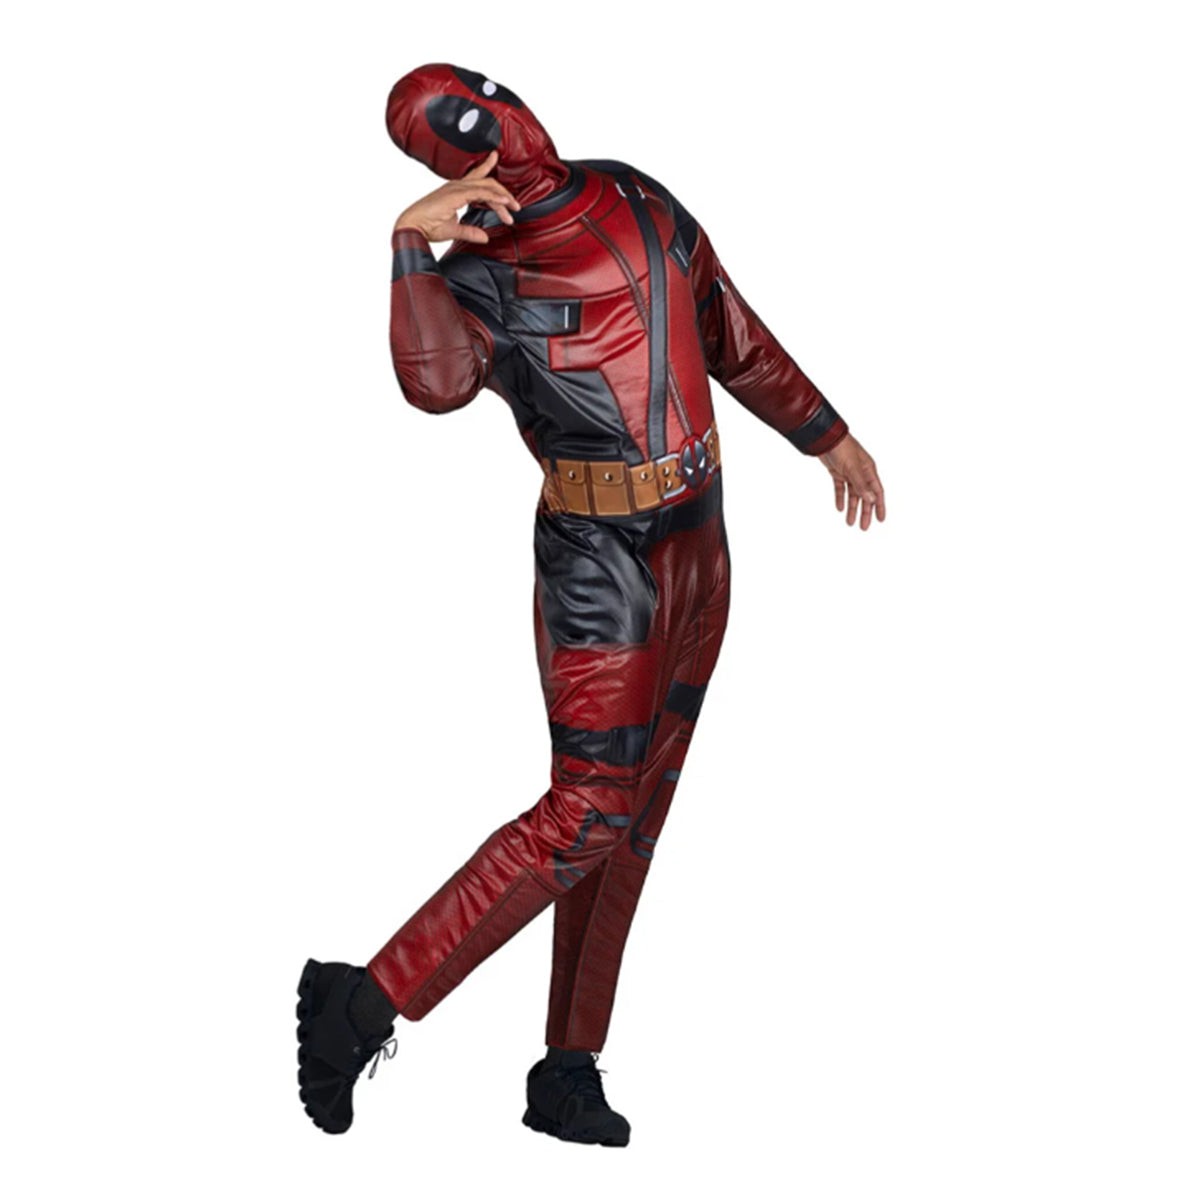 KROEGER Costumes Marvel Deadpool Costume for Adults, Padded Jumpsuit